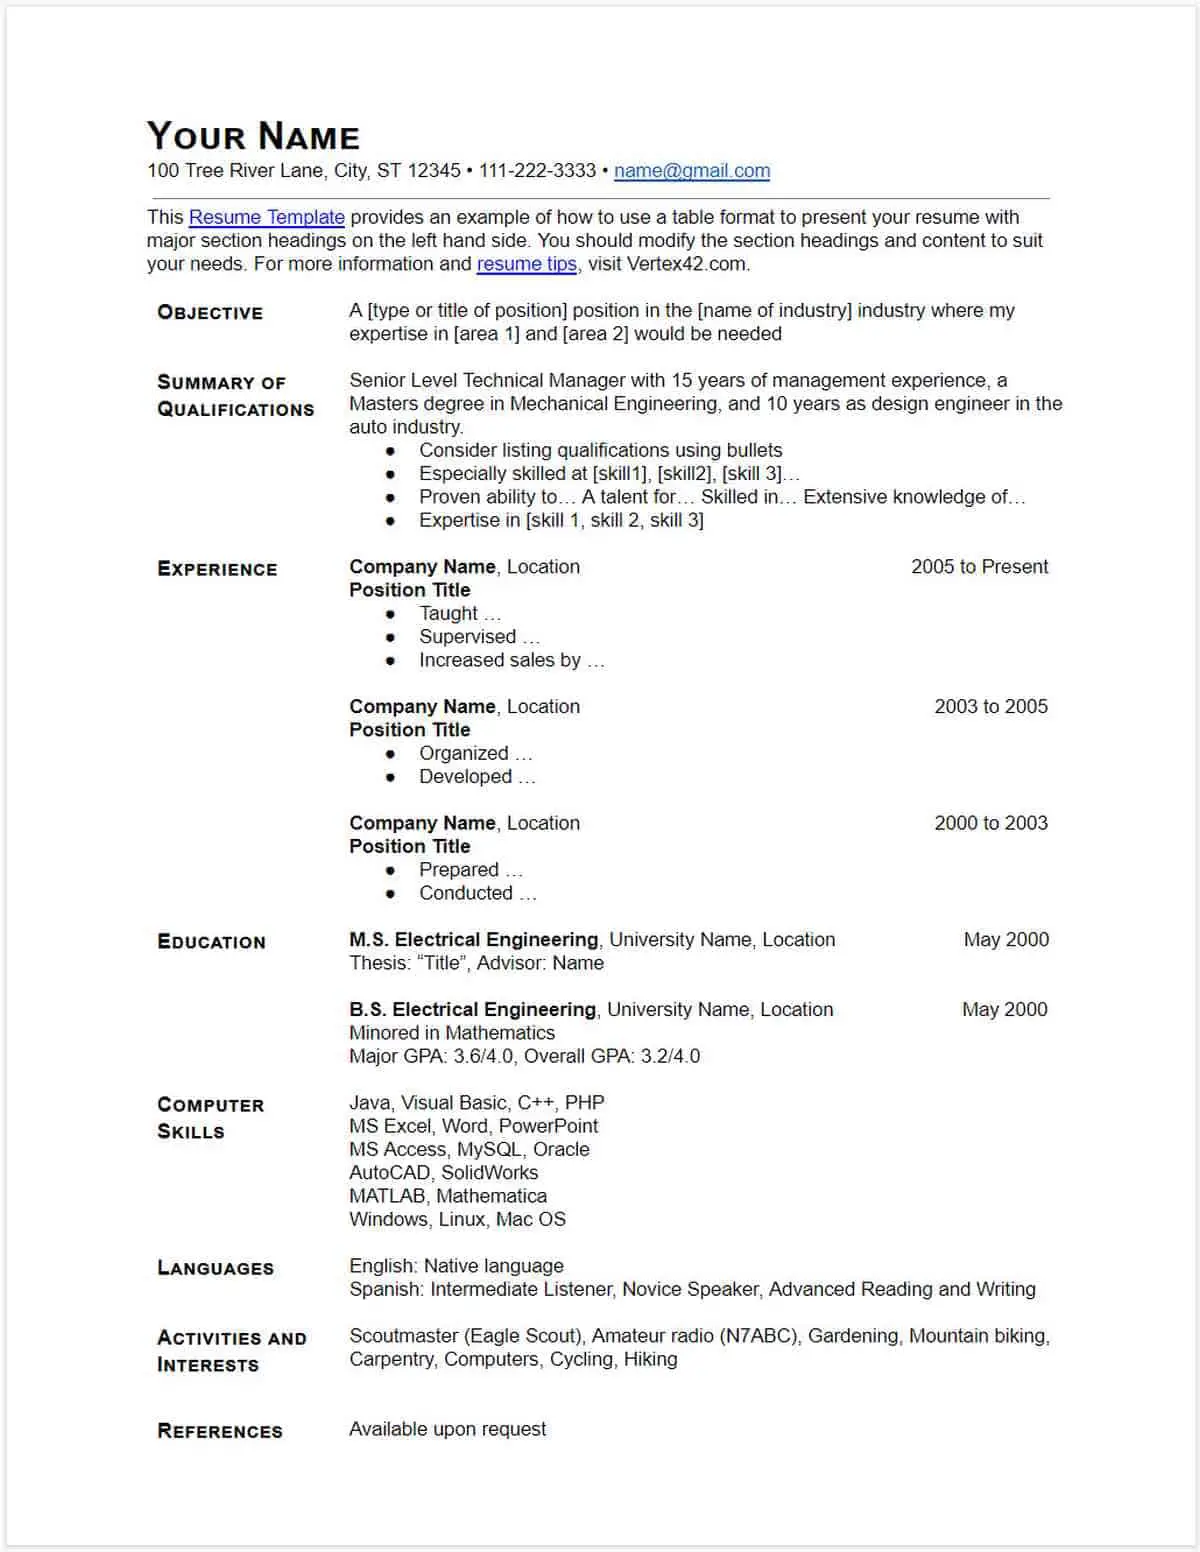 Simple CV Resume Template | Google Docs Resume Templates [Downloadable PDFs] | Google Docs resume template free | how to make a resume on Google Docs